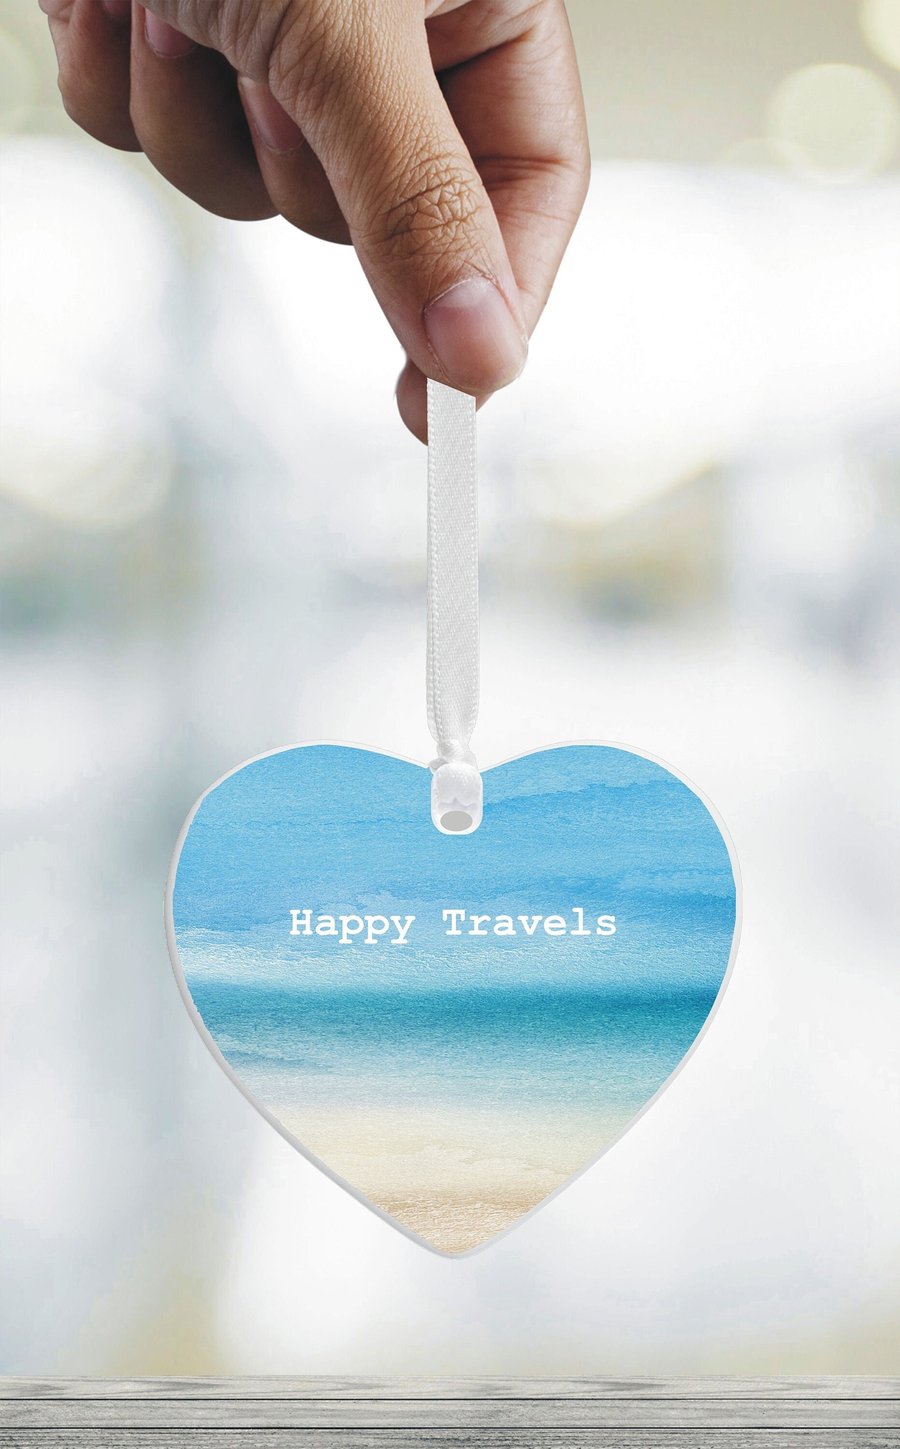 Happy Travels Ceramic Heart Keepsake - Gift for Friend - Bon Voyage - Travelling